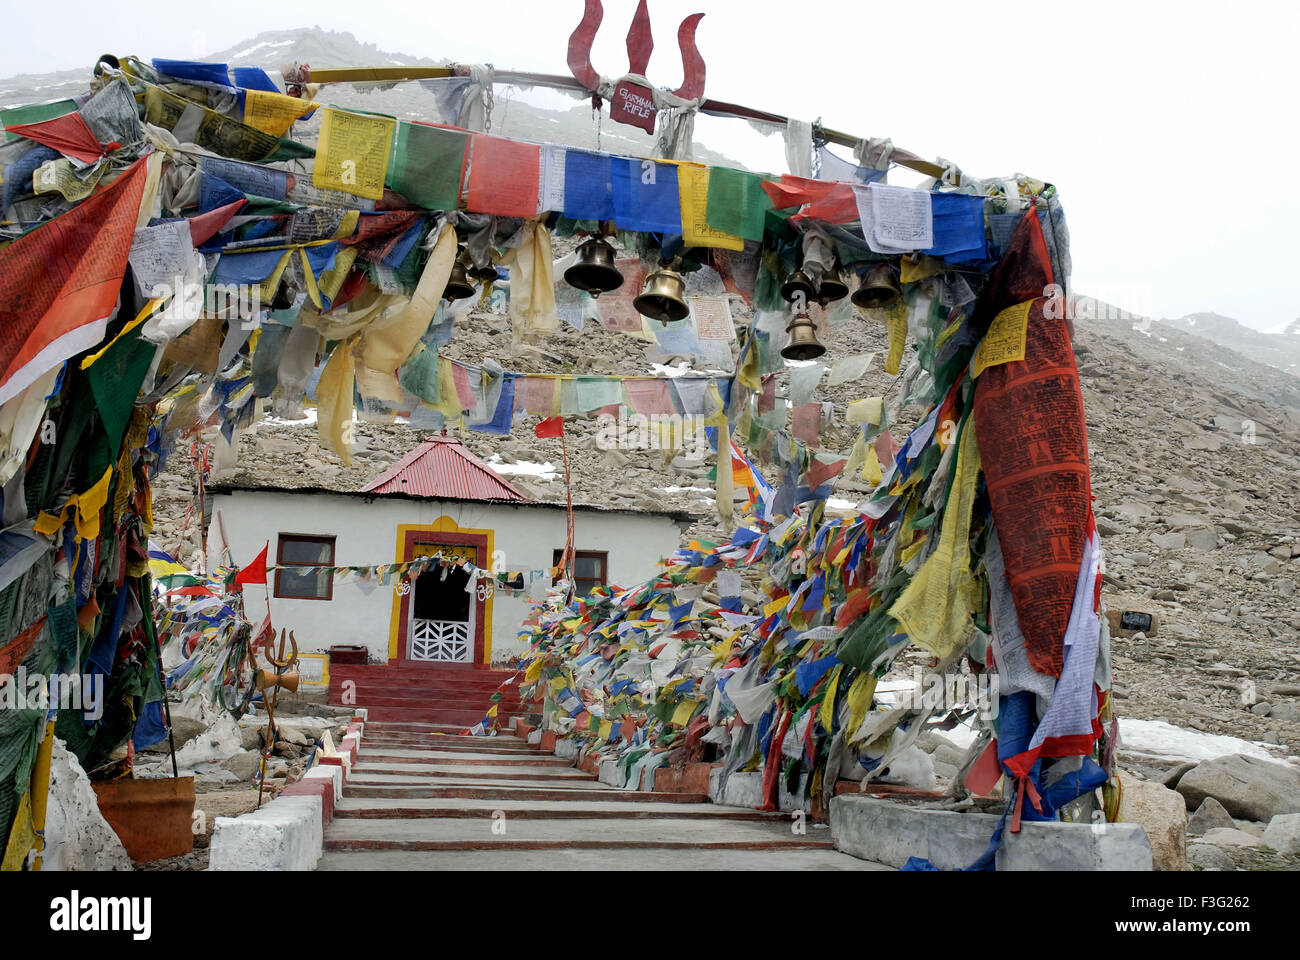 Chang La Baba temple ; Chang La Pass ; Leh ; Ladakh ; Jammu and Kashmir ; India Stock Photo